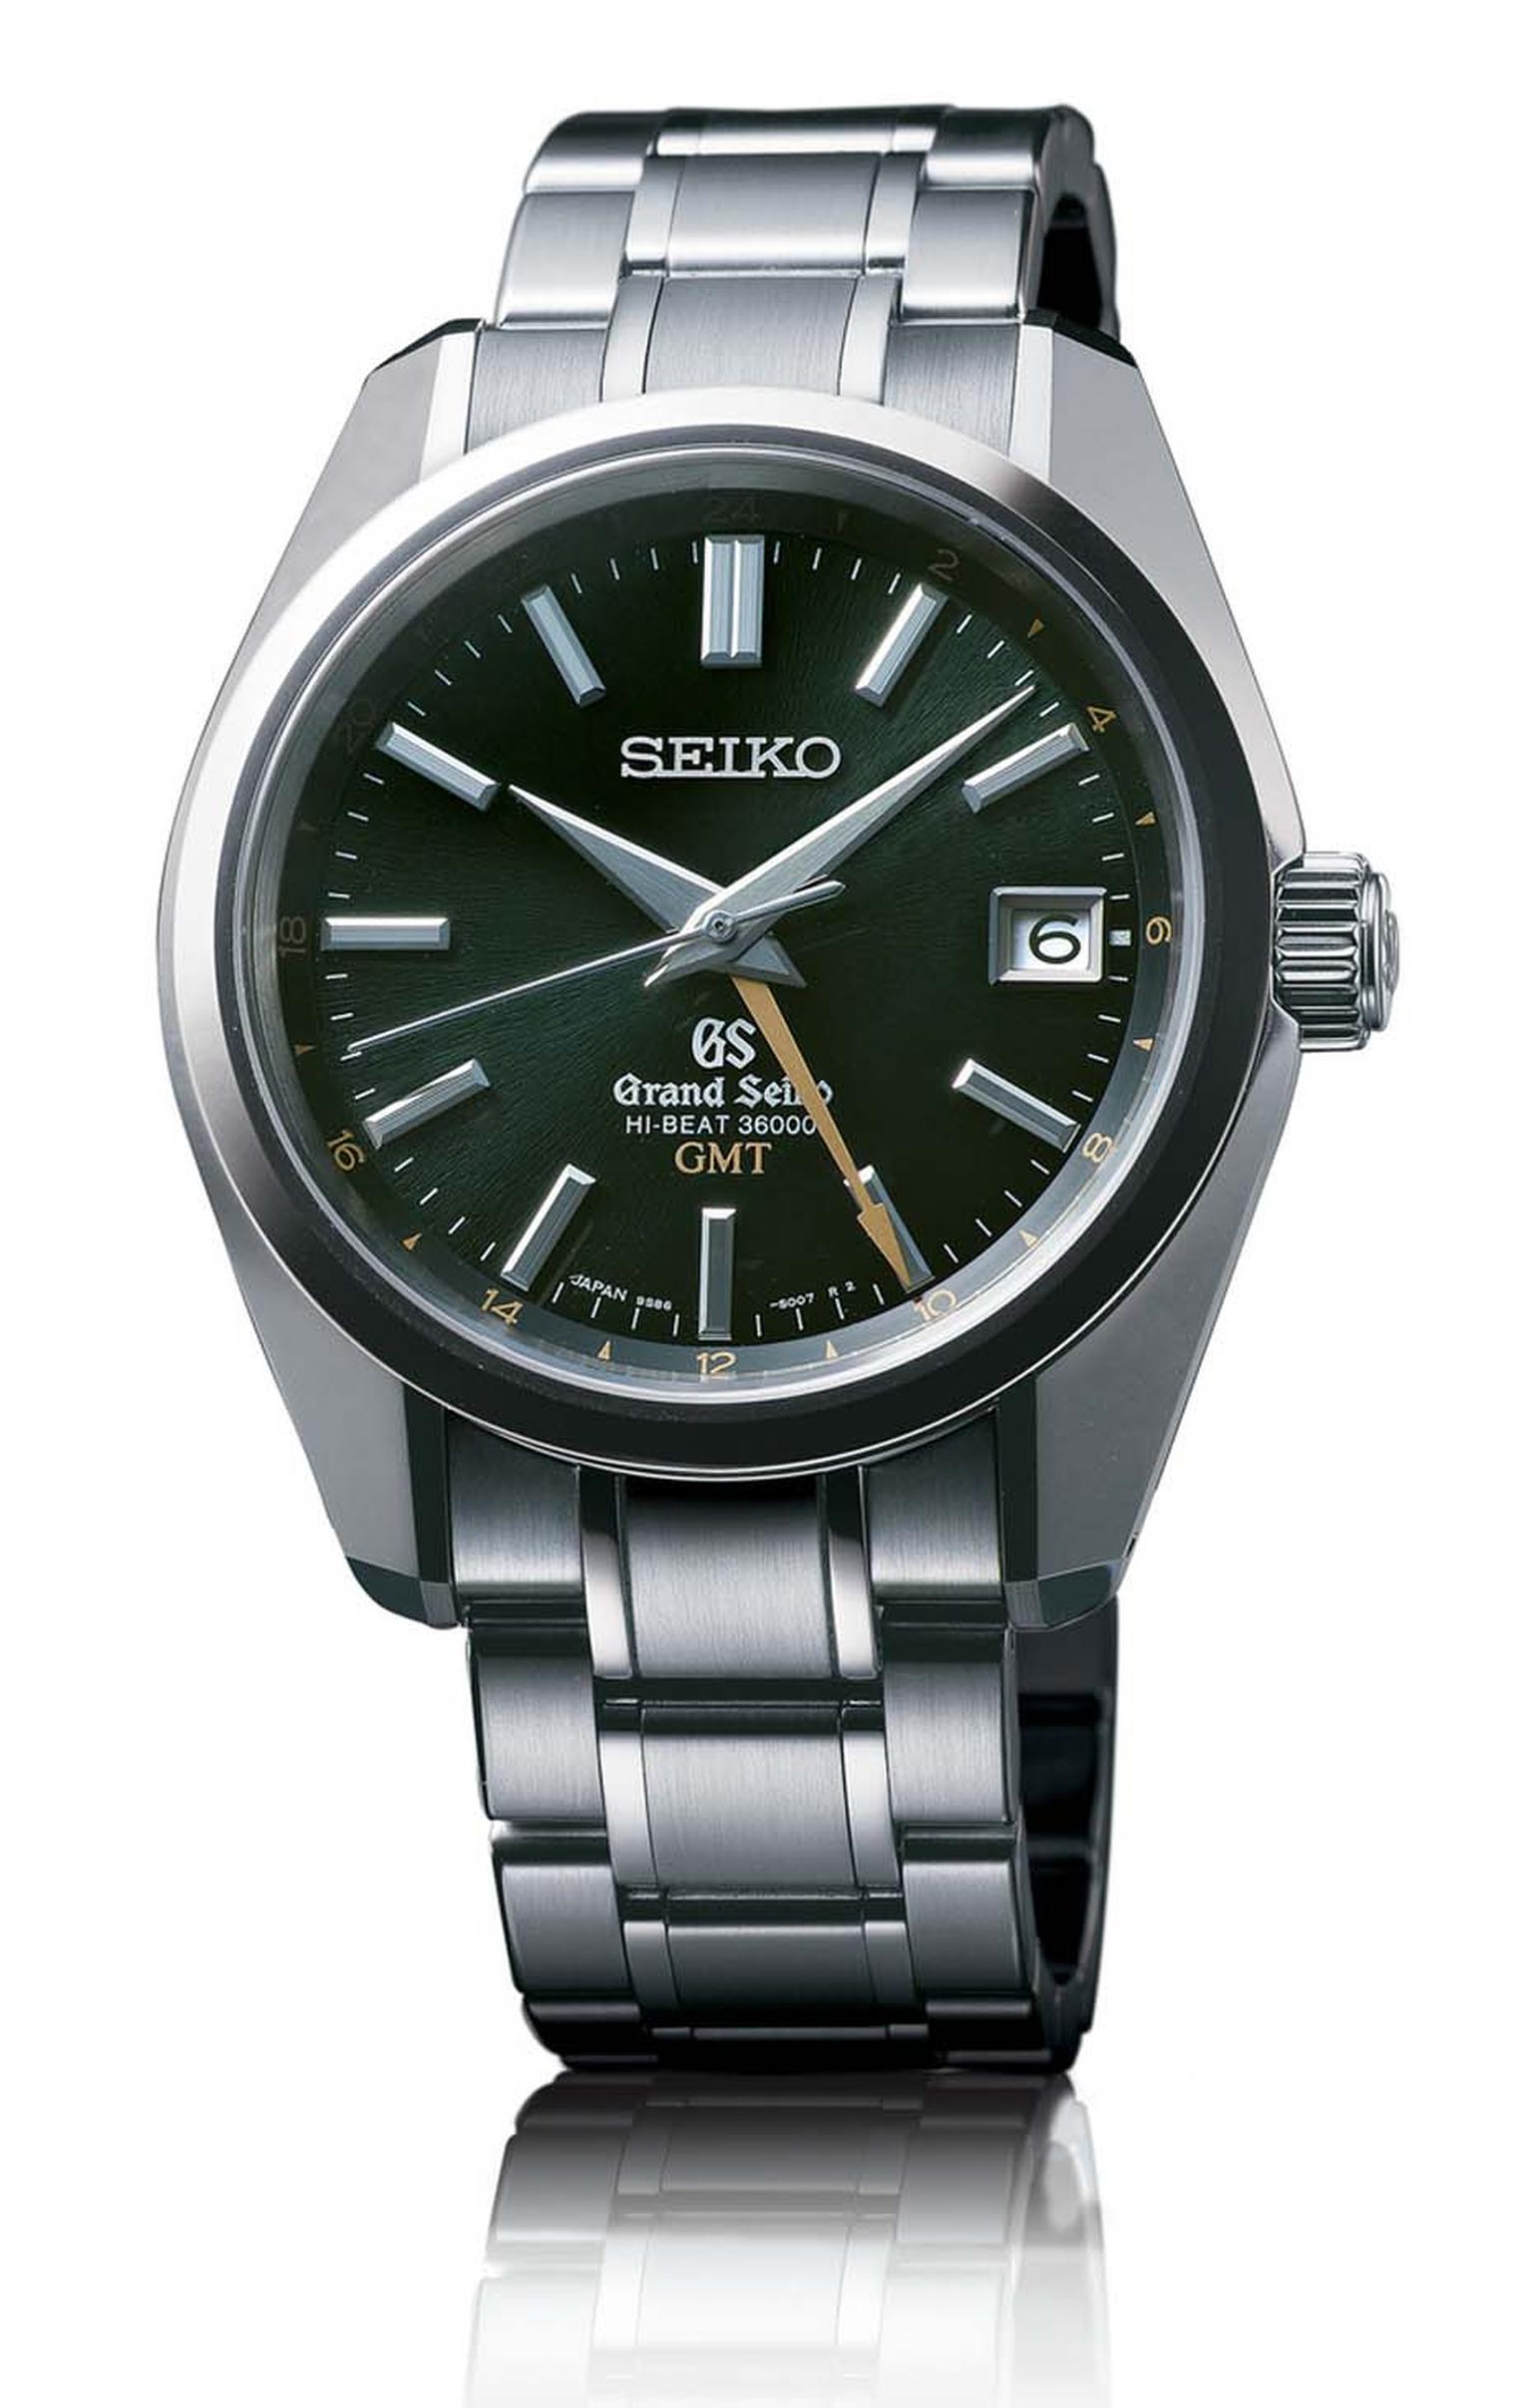 Seiko's Grand Seiko Hi-Beat 36000 GMT watch secured the